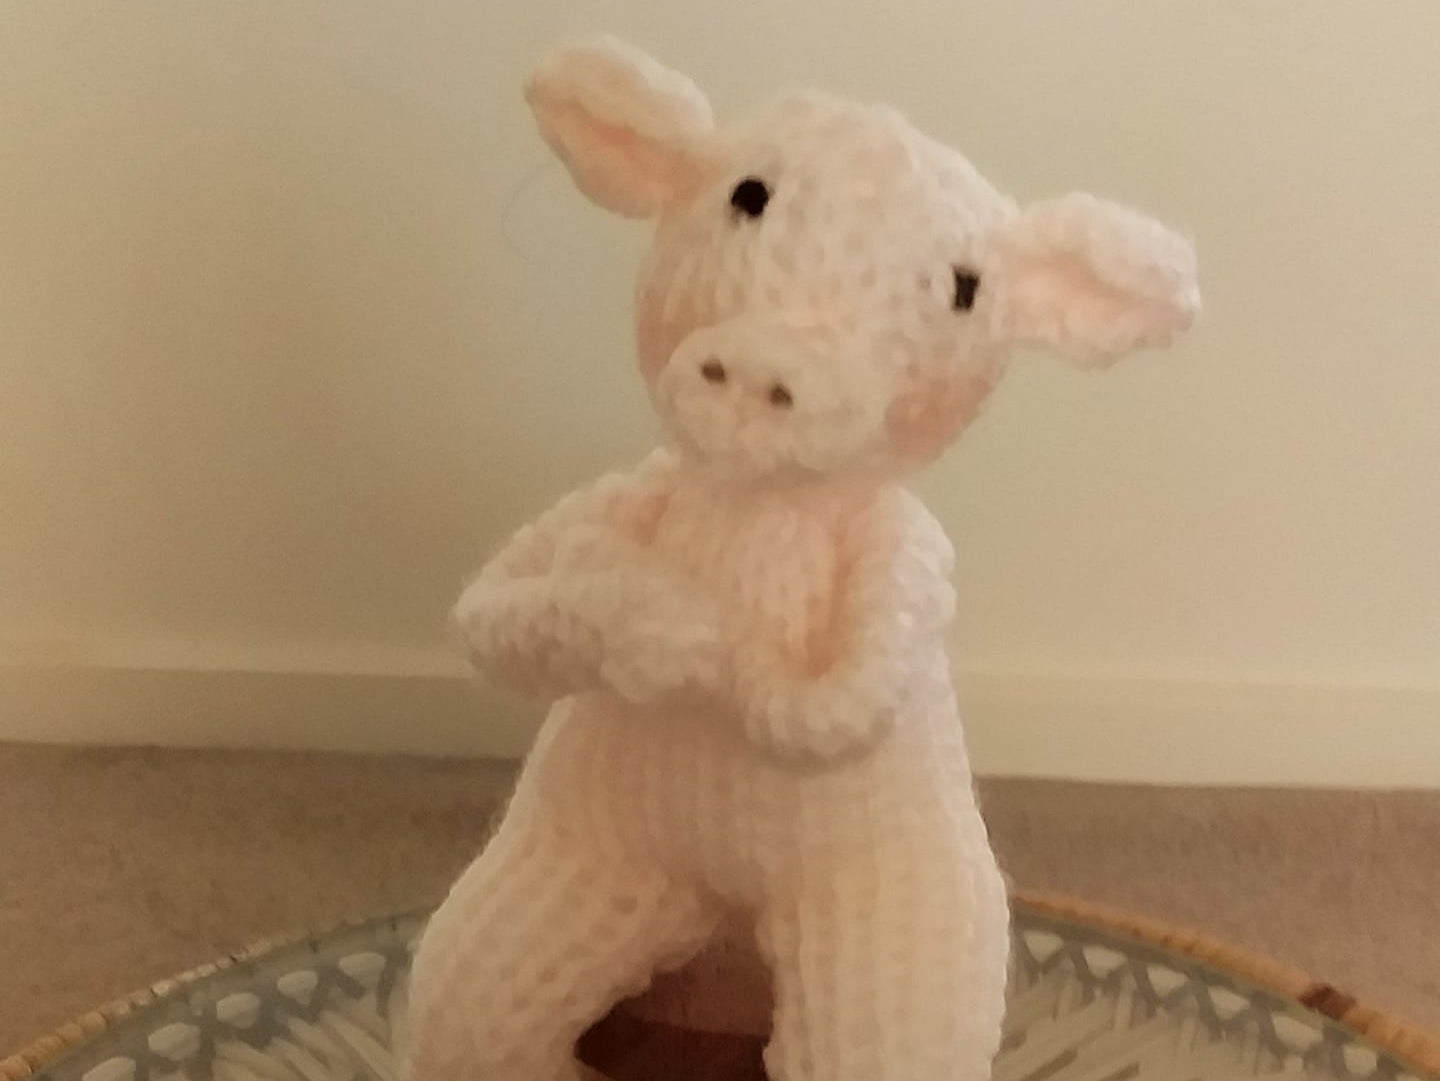 One of Rita Rich-Mulcahy’s woolly pig creations